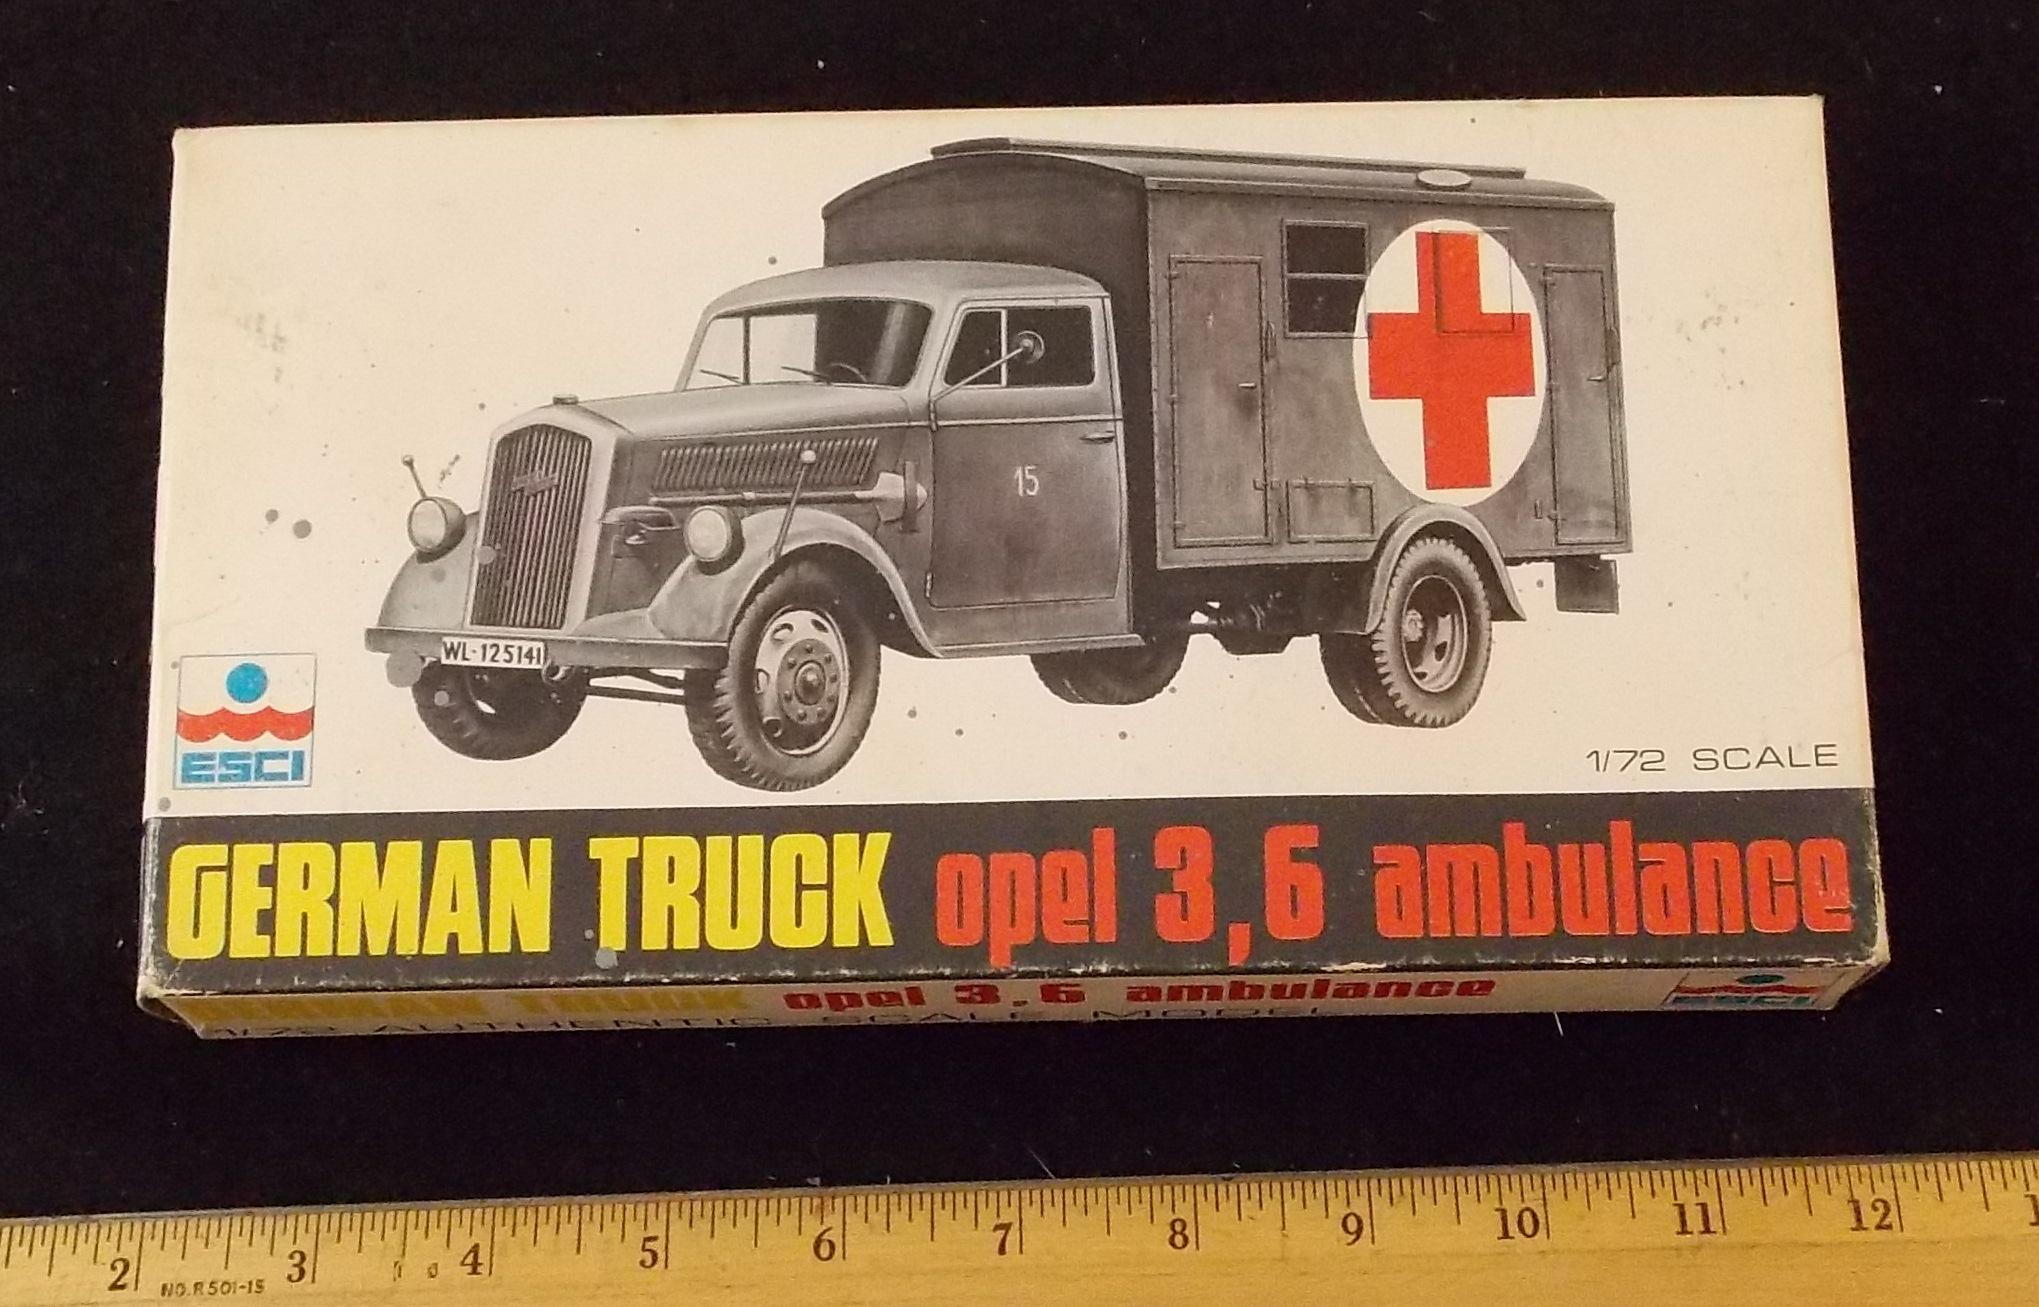 ESCI 1/72 Scale German Truck Opel 3,6 Ambulance  Military Vehicle Model Kit